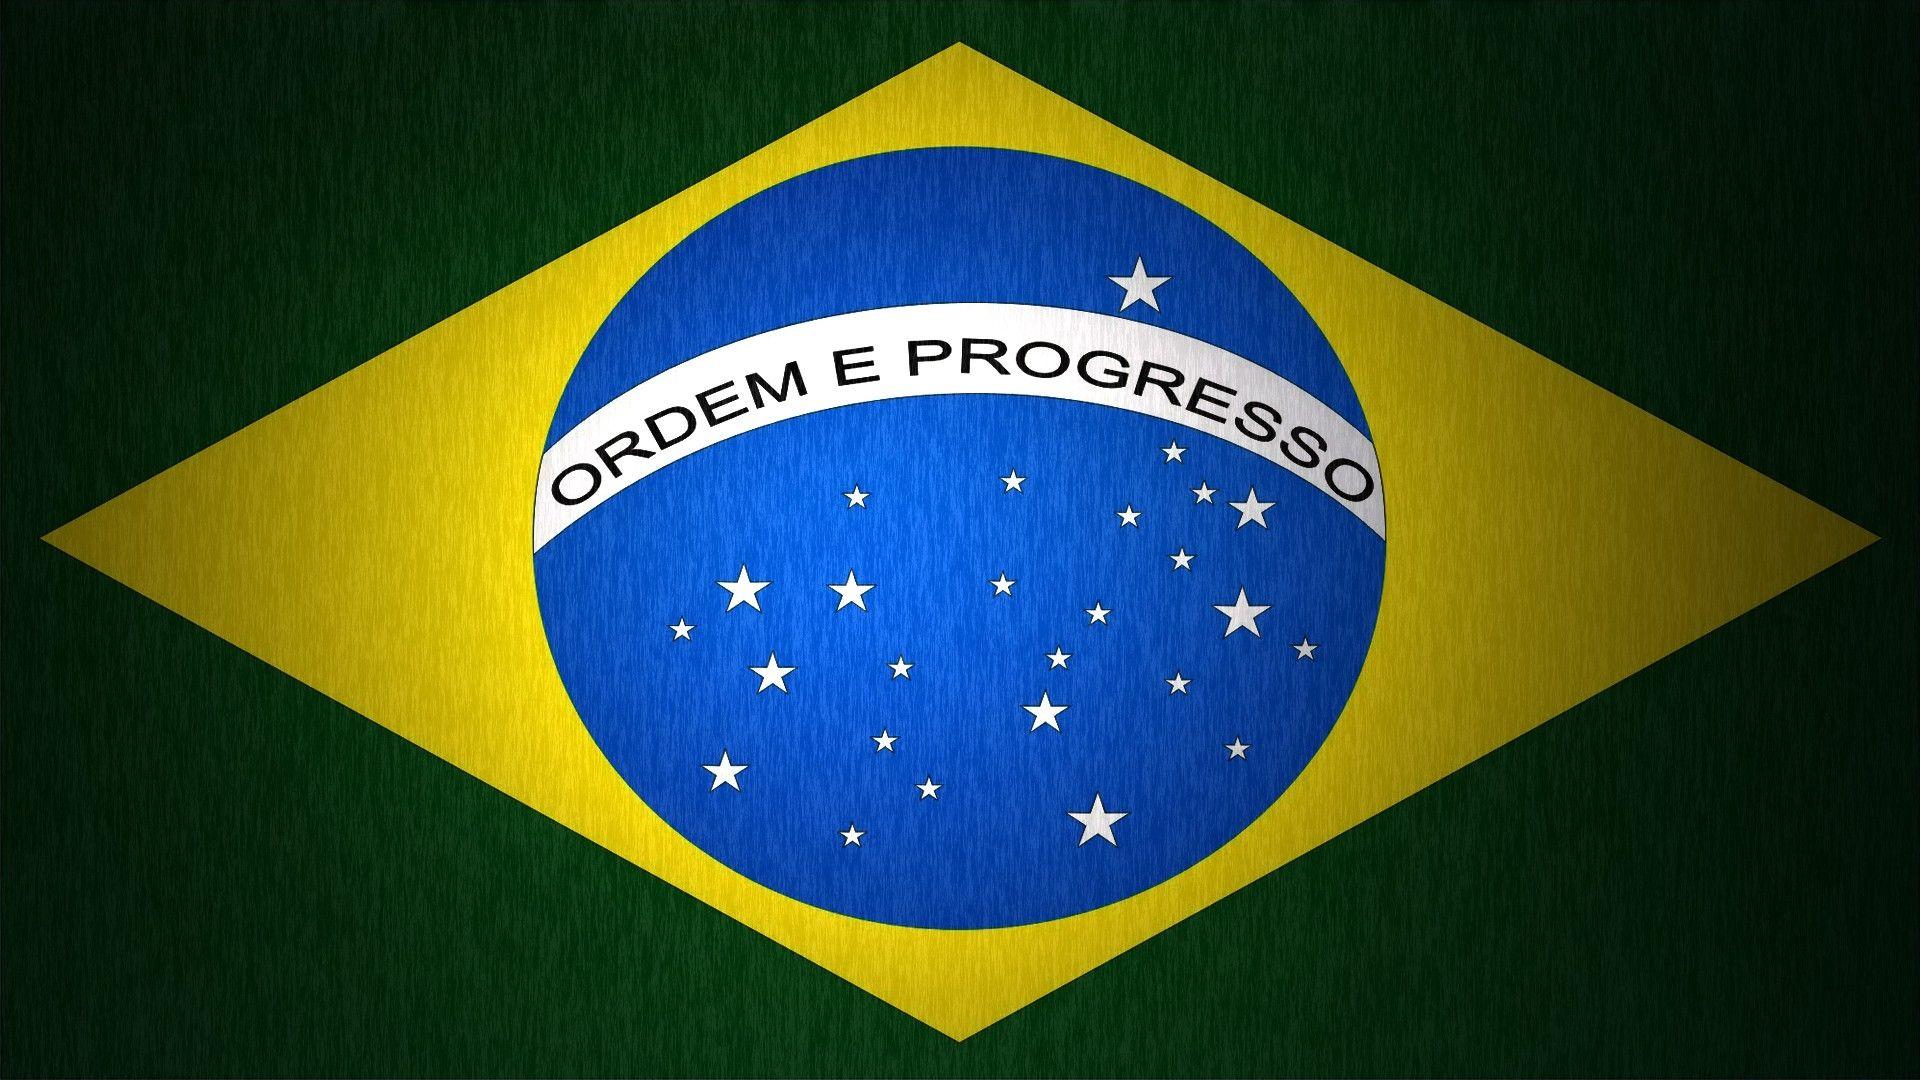 Brazil Flag Symbol Wallpaper 1920x1080 px Free Download